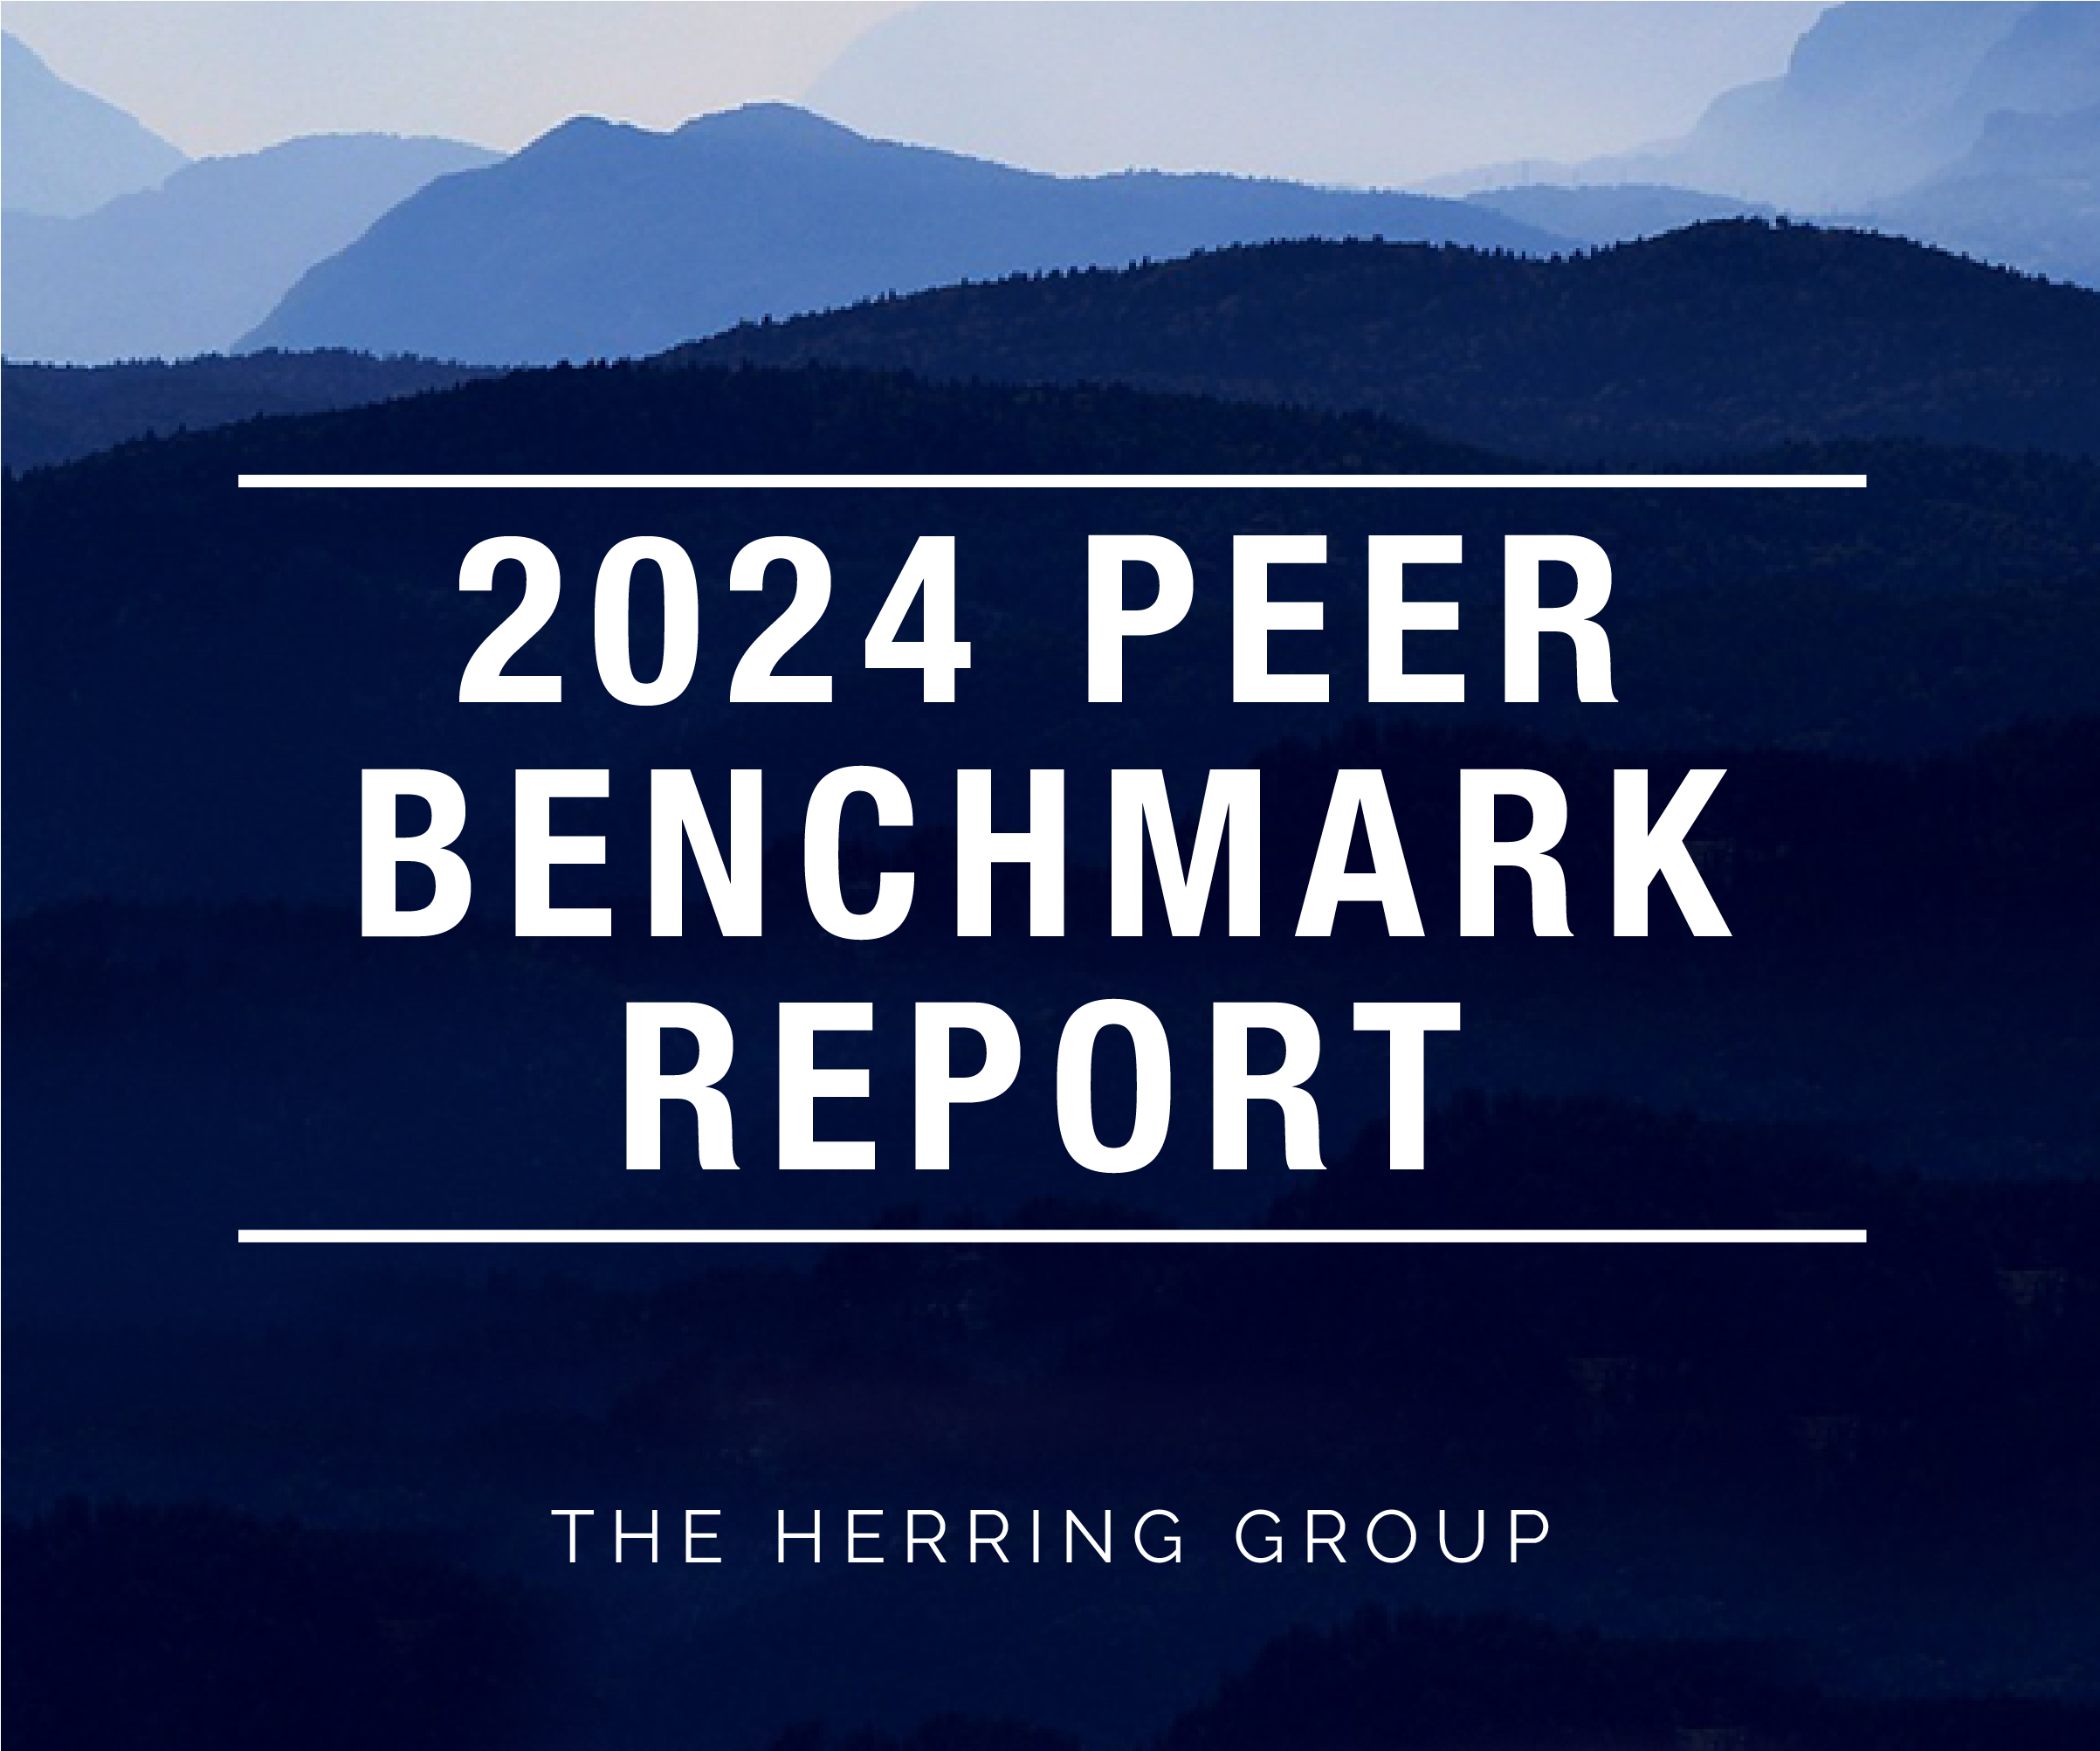 2024 Peer Benchmark Report, The Herring Group